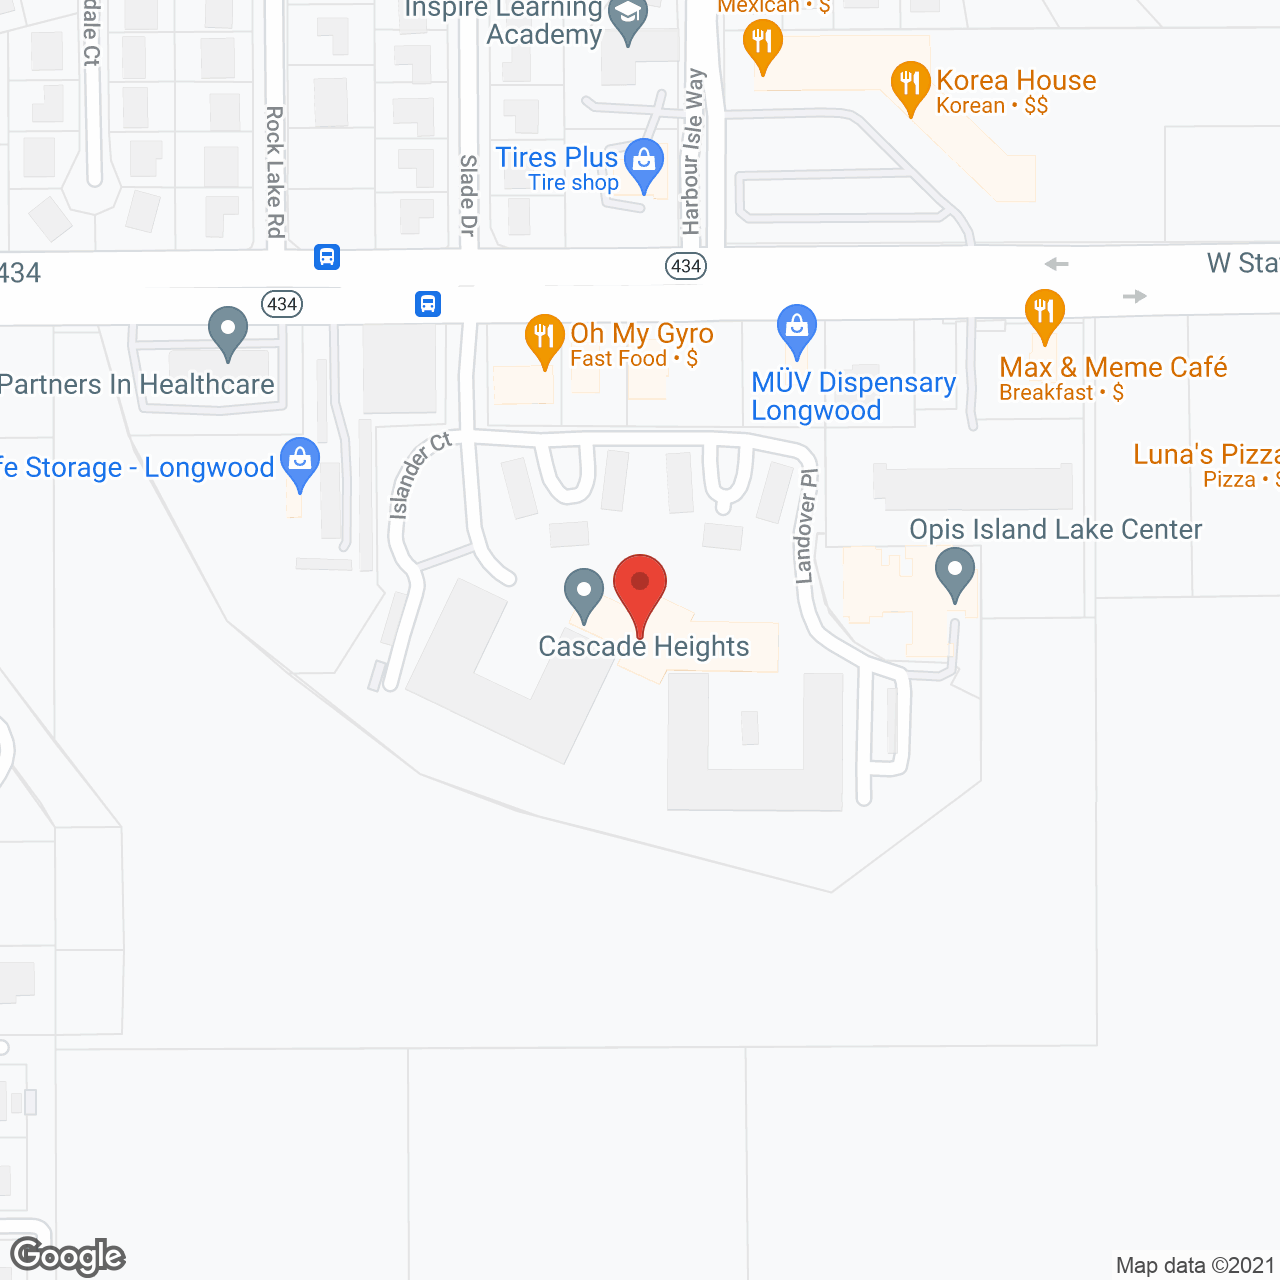 Cascade Heights in google map